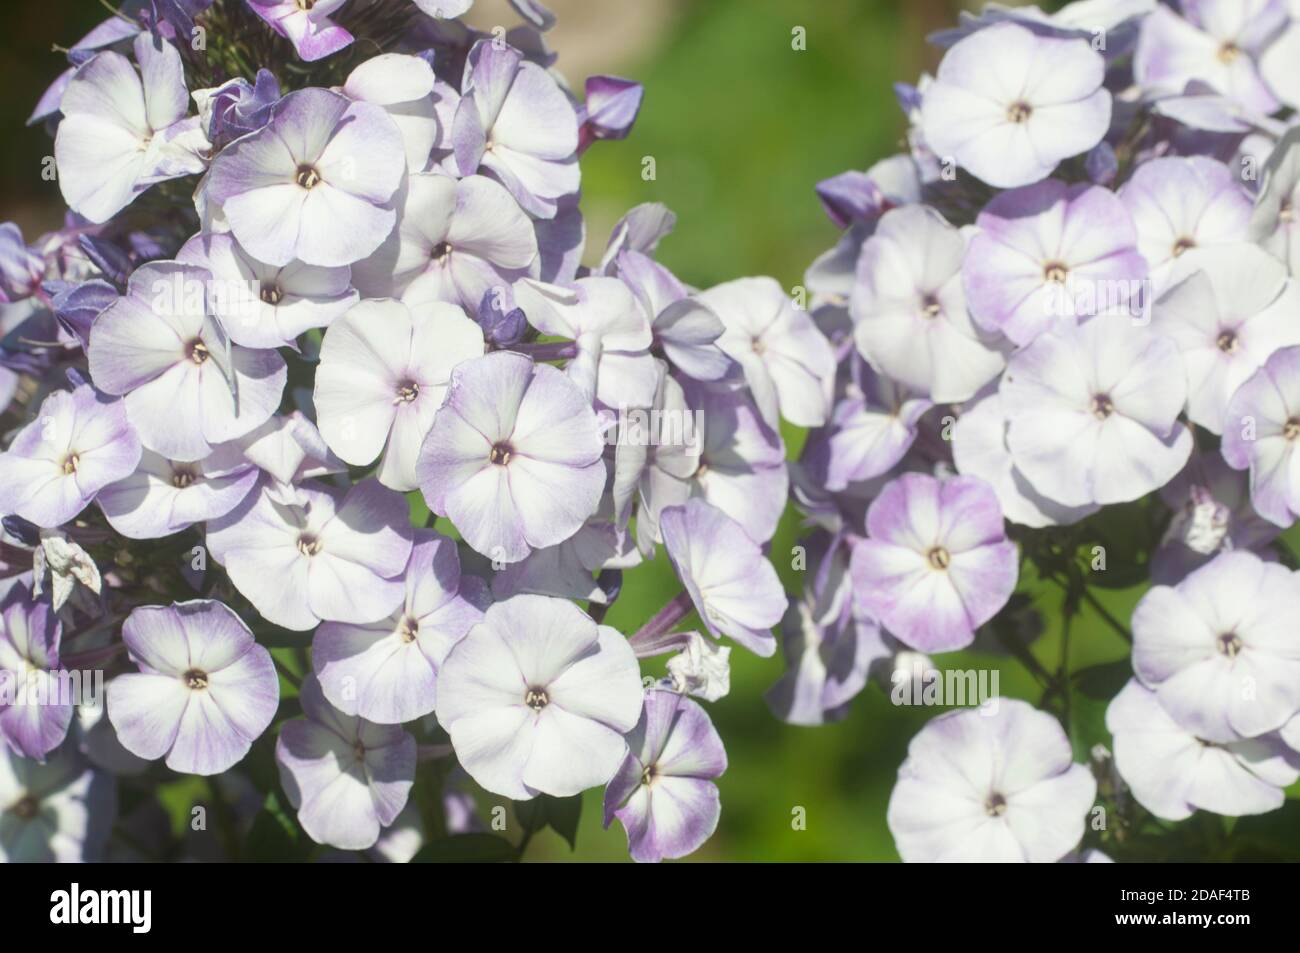 Garden phlox flowers close up shot in summer Stock Photo